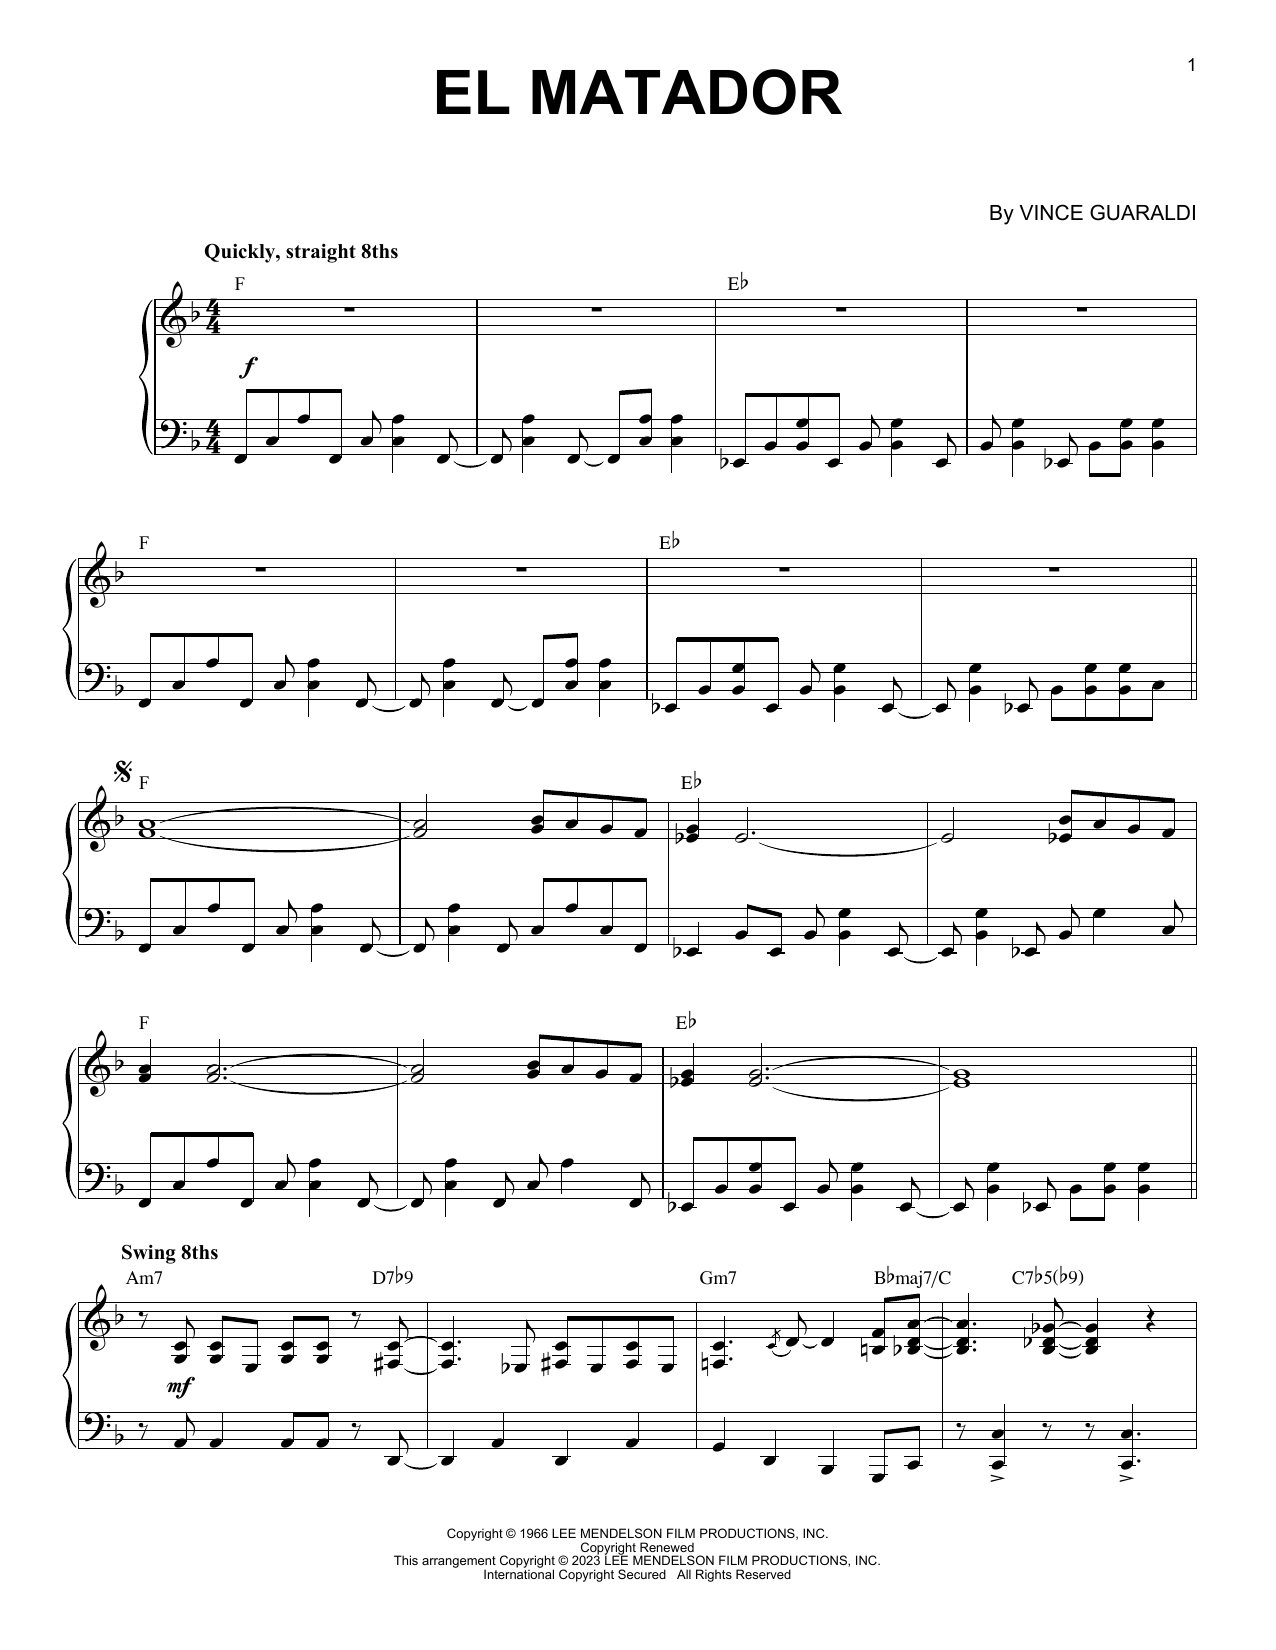 Vince Guaraldi El Matador [Jazz version] (arr. Brent Edstrom) Sheet Music Notes & Chords for Piano Solo - Download or Print PDF